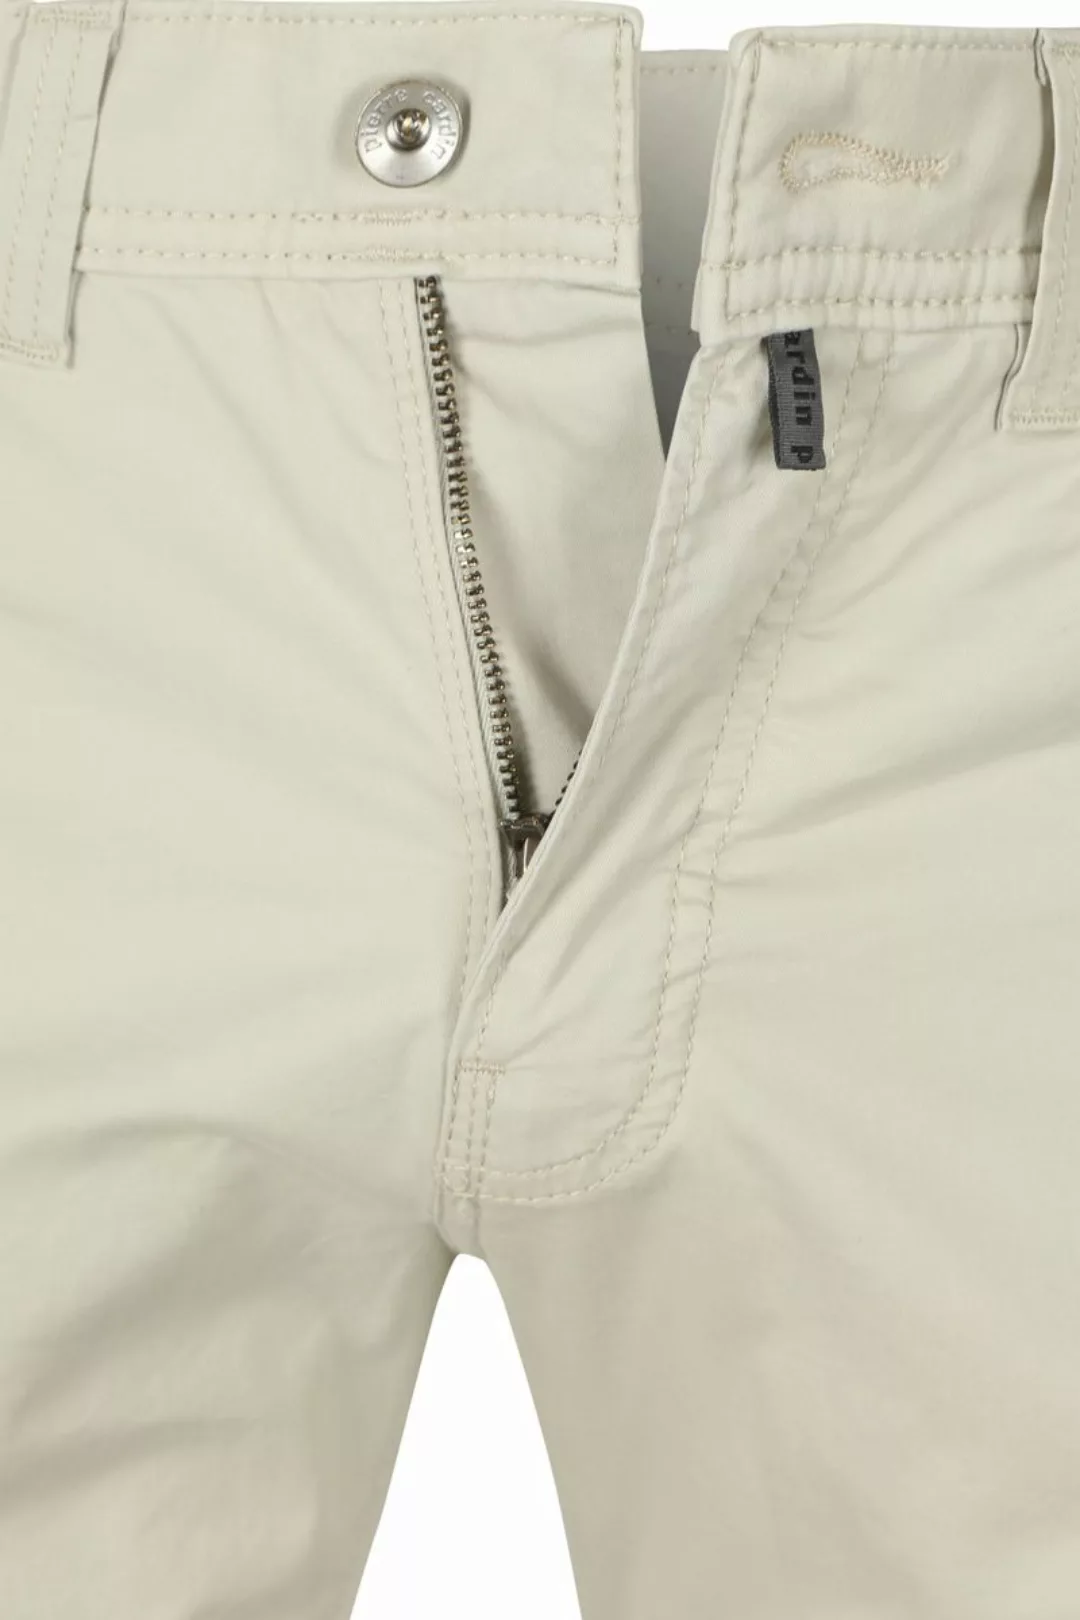 Pierre Cardin Trousers Lyon Tapered Ecru - Größe W 35 - L 34 günstig online kaufen